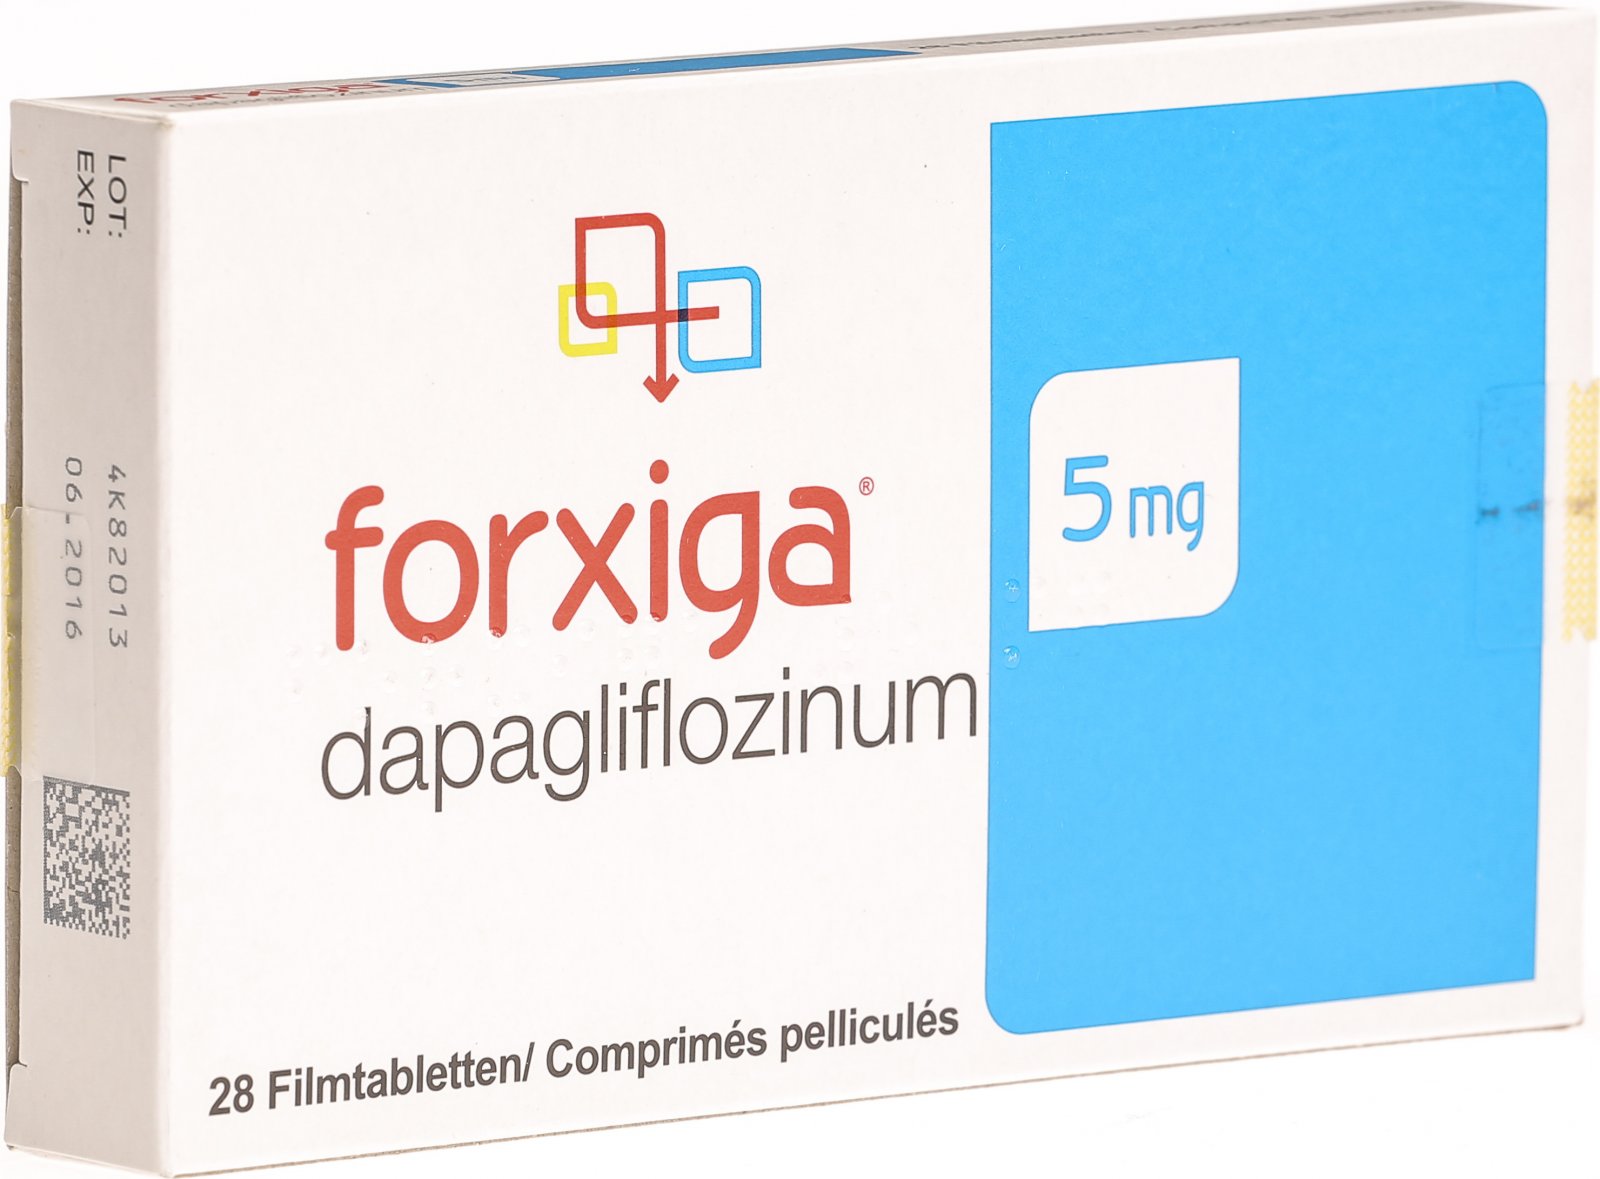 Лекарство от сахарного диабета форсига. Форсига 5 мг. Таблетки форсига 5мг. Дапаглифлозин форсига 10 мг. Дапаглифлозин 5 мг.